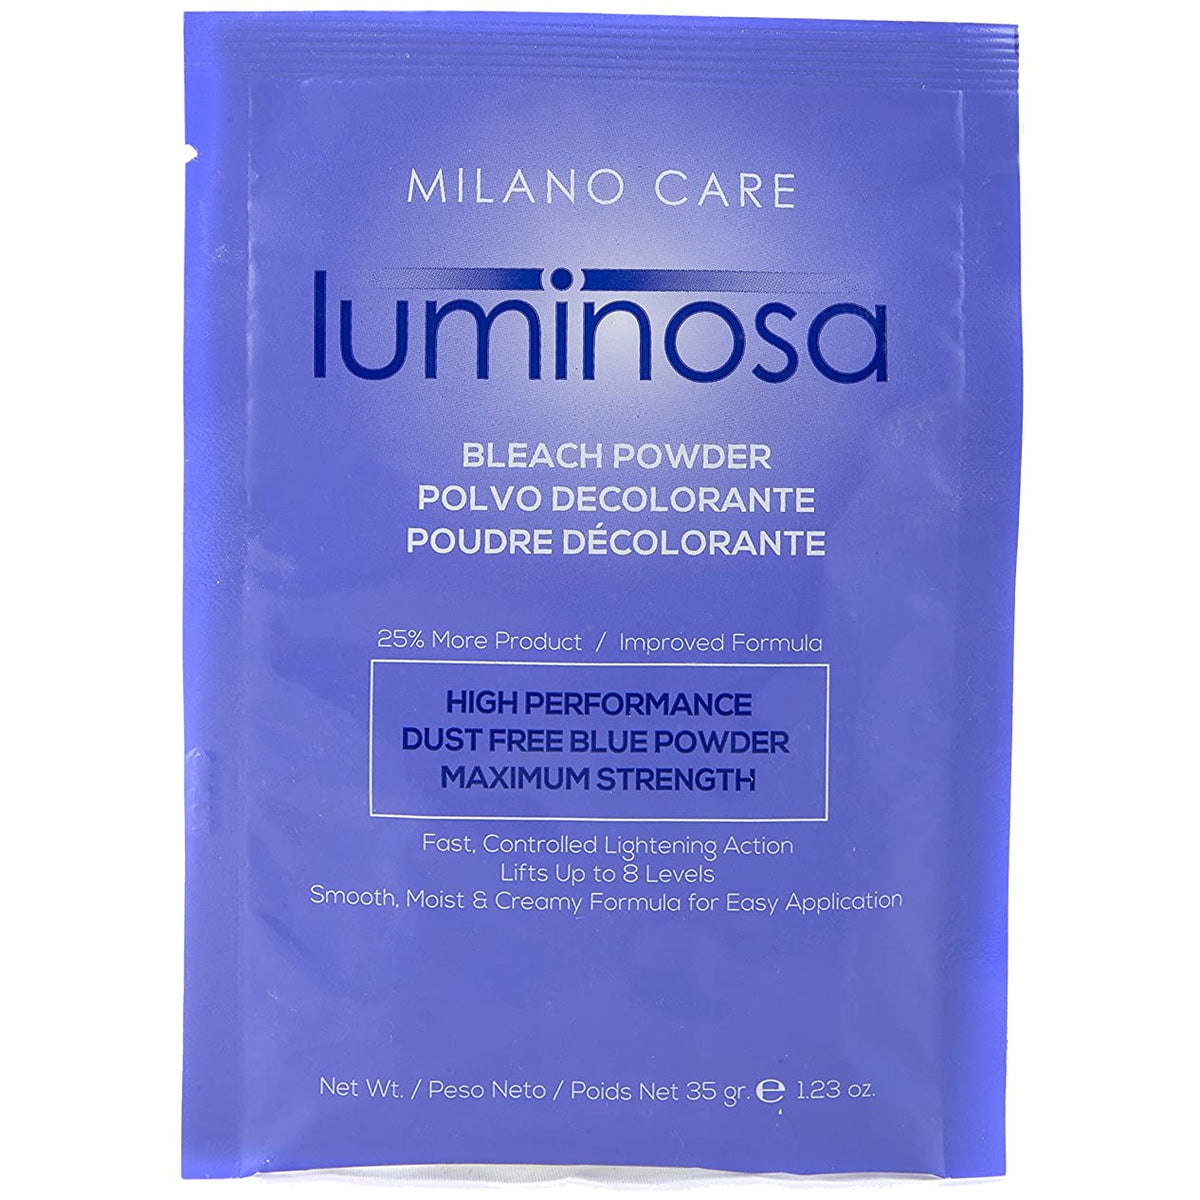 Milano Care Luminosa Bleach Powder - Dust Free Blue